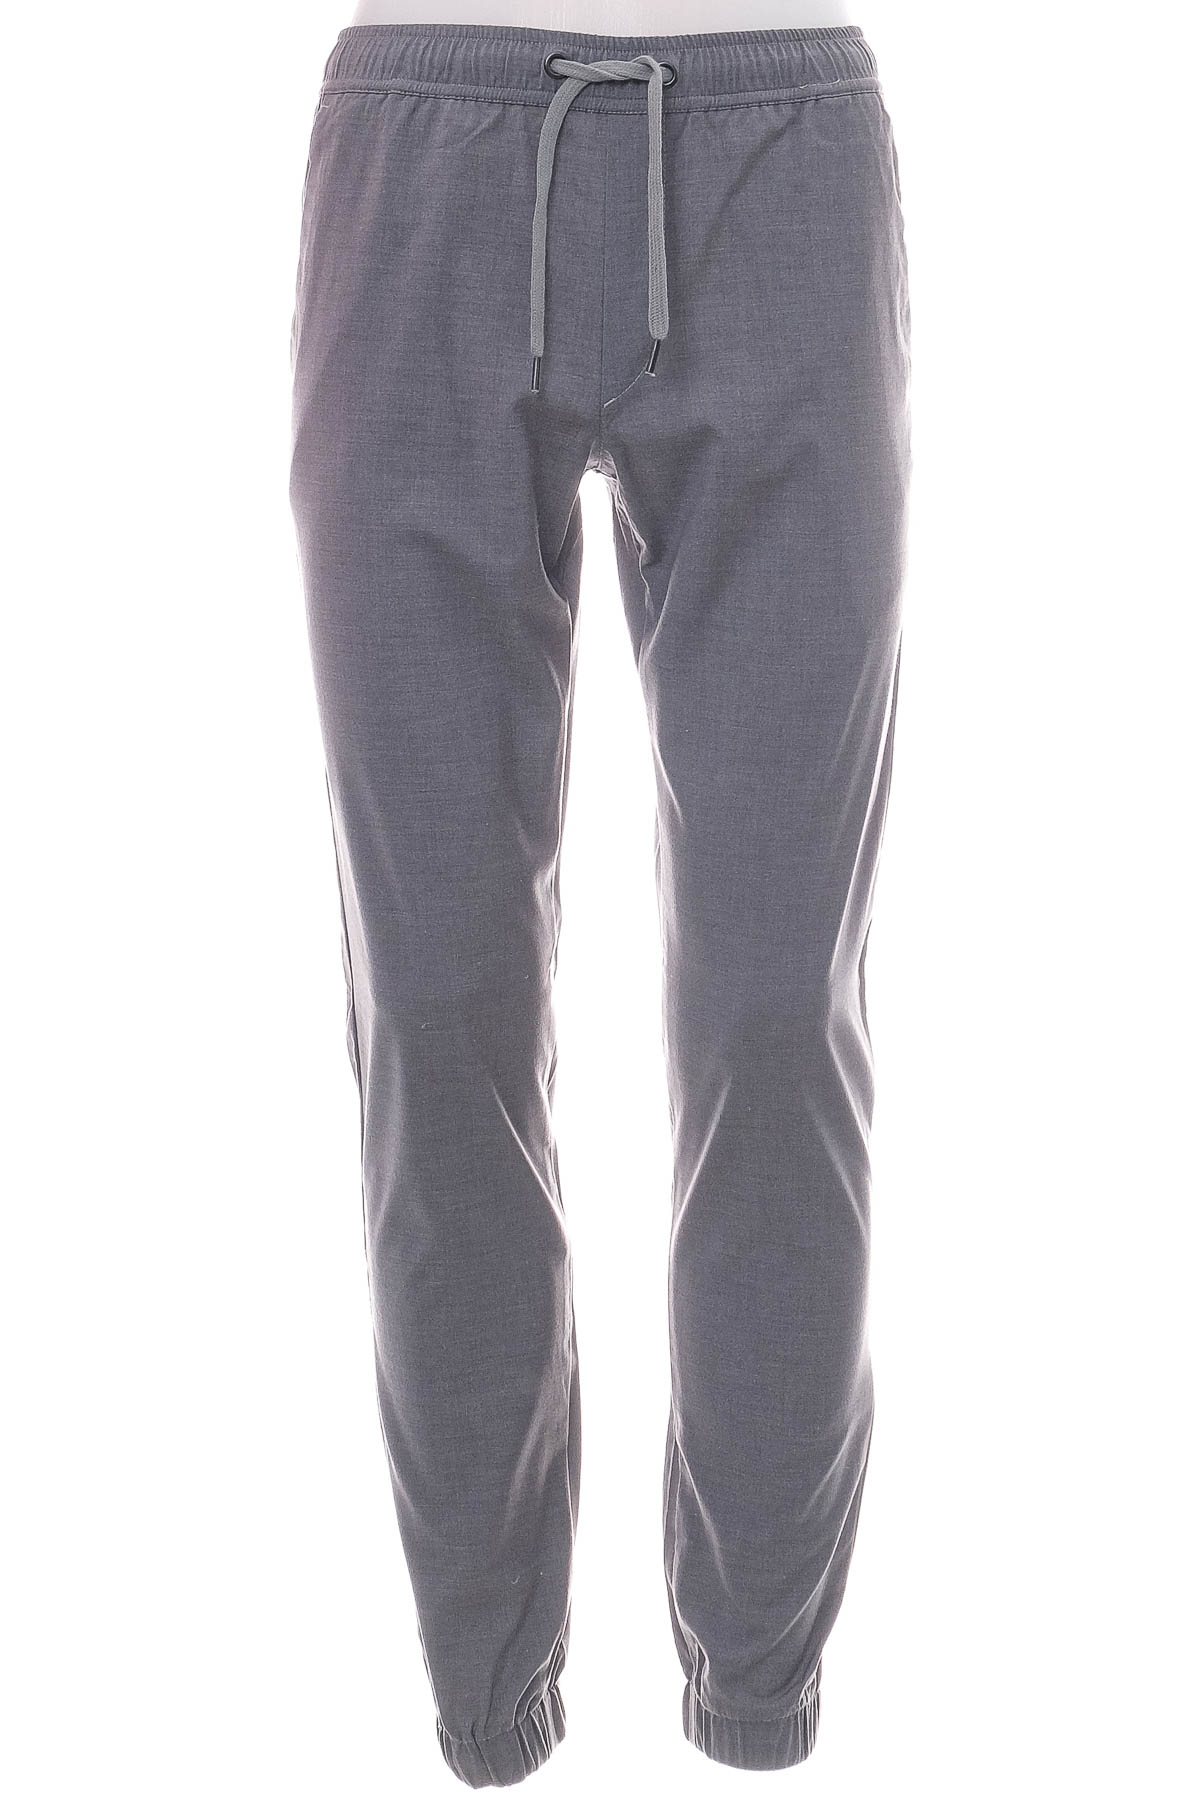 Men's trousers - Gu - 0